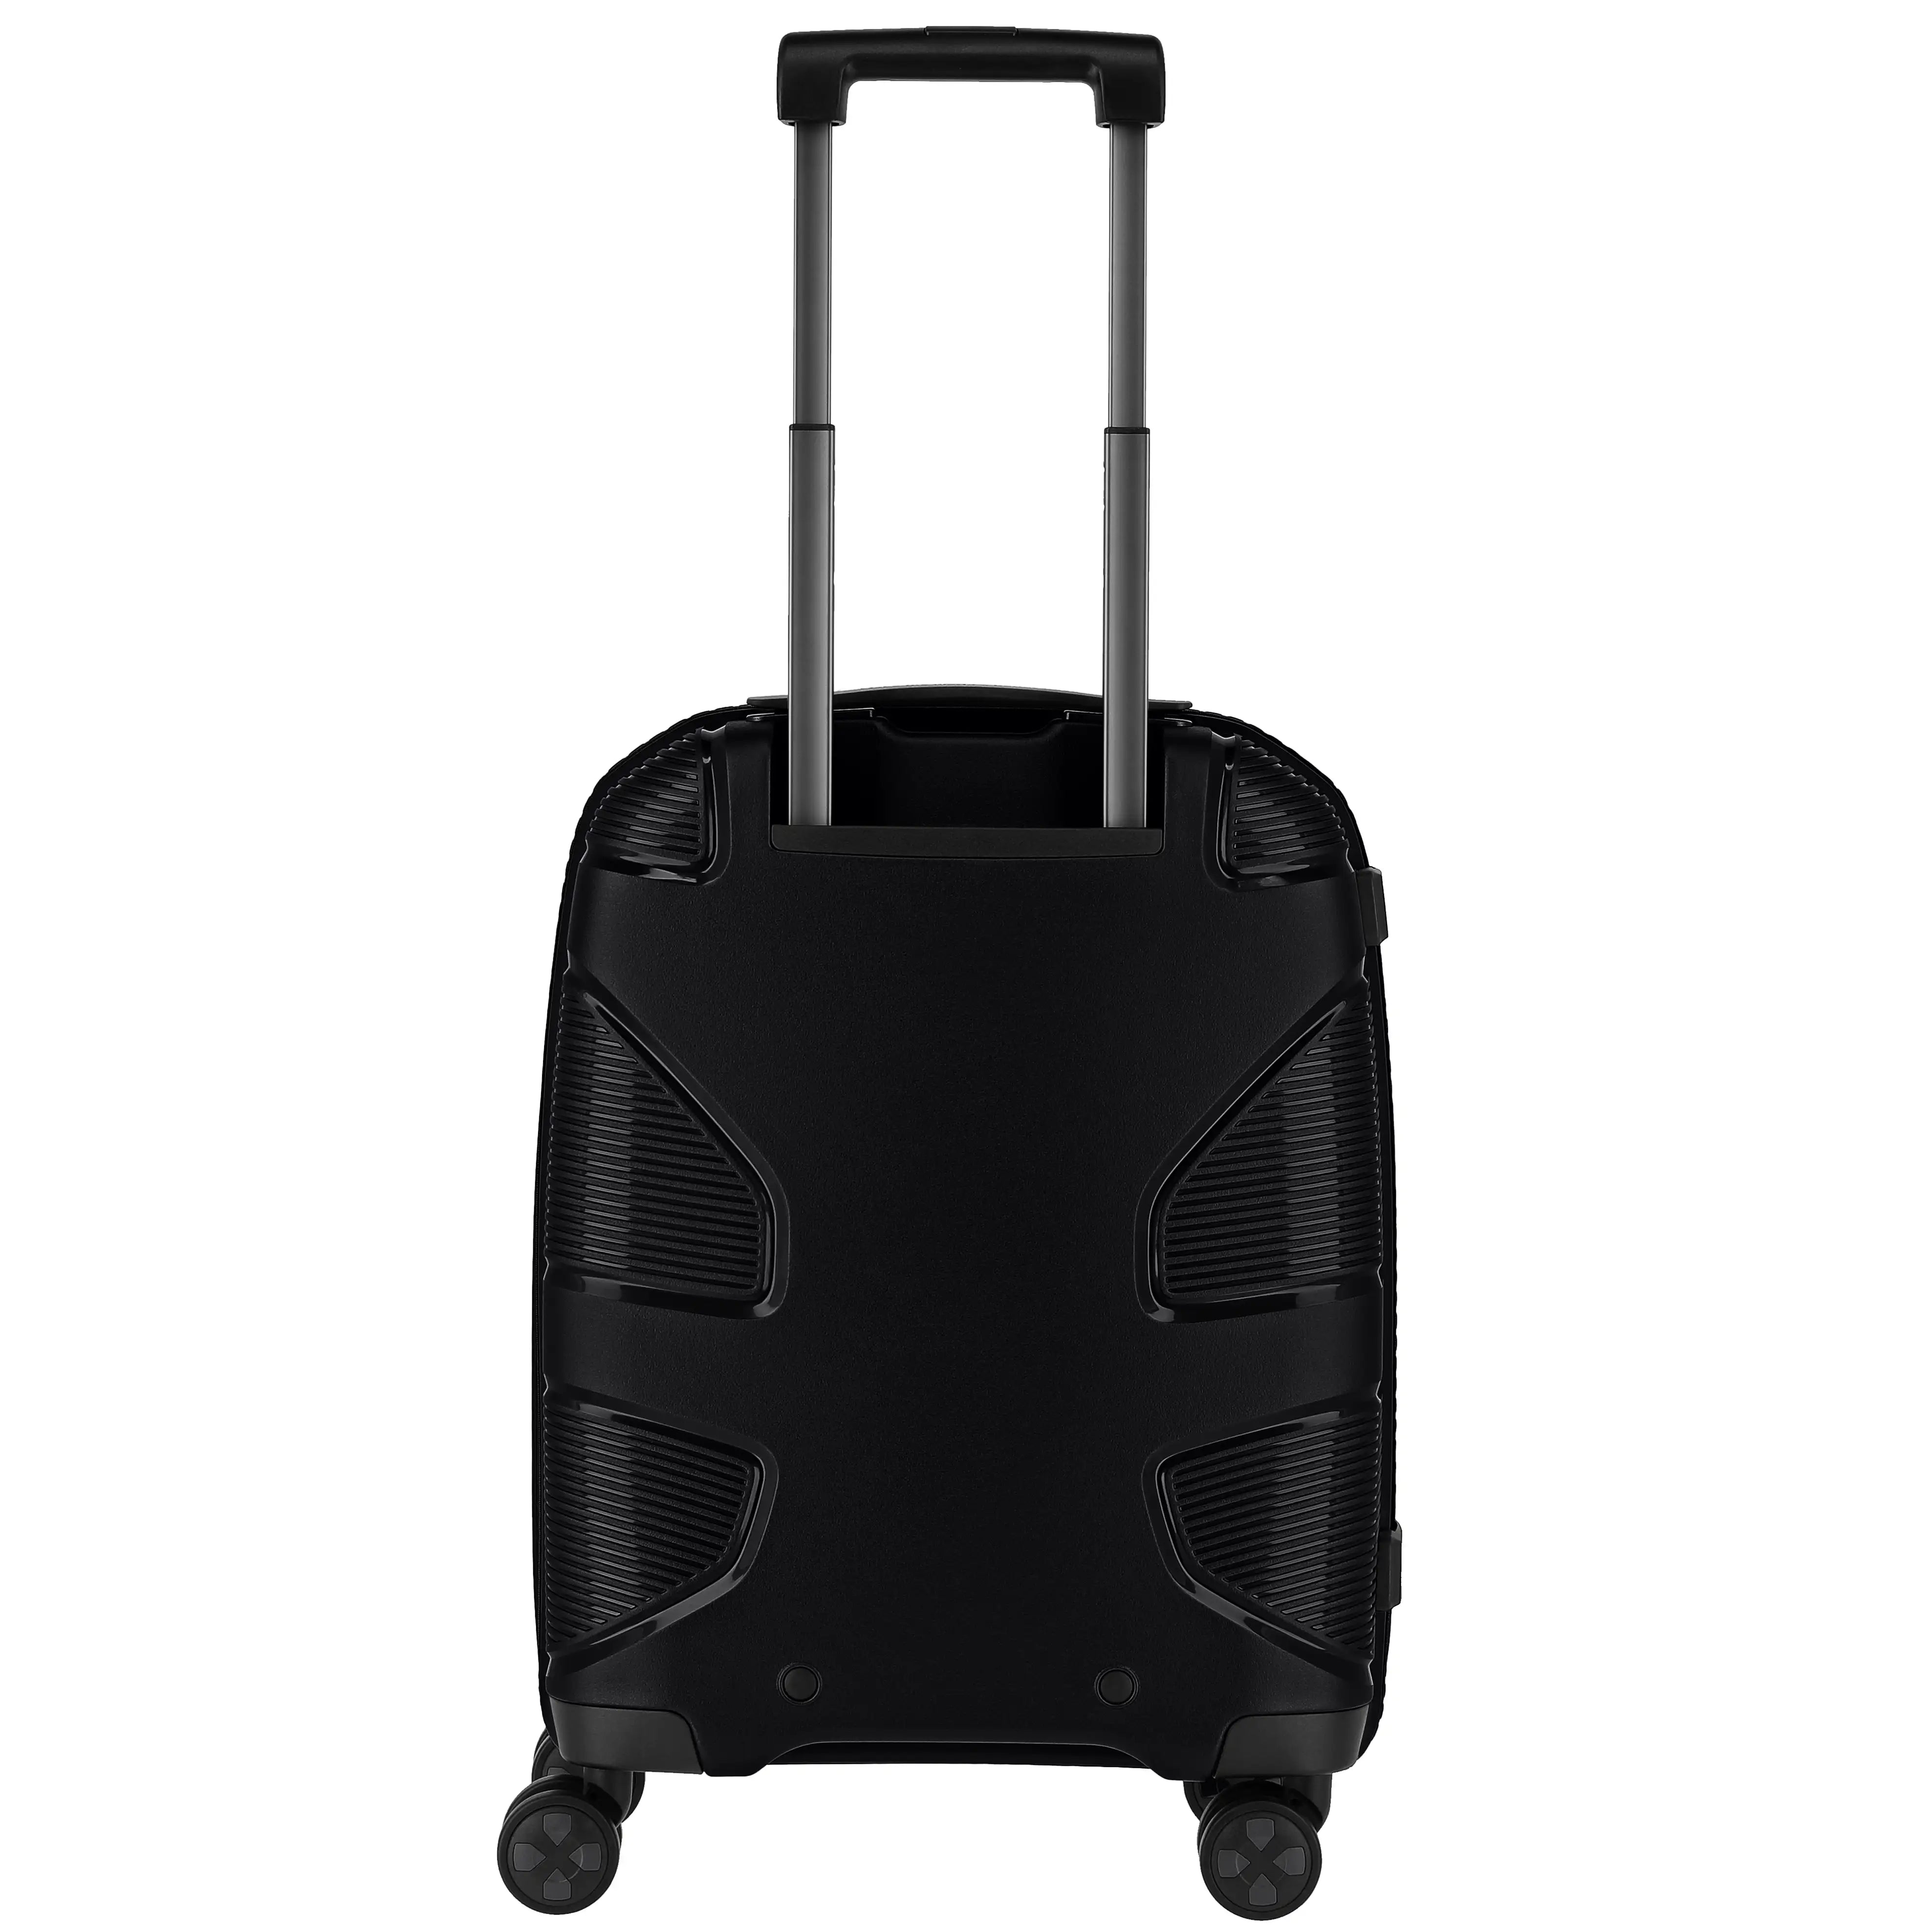 Impackt IP1 4-wheel cabin suitcase 55 cm - Garden Apricot